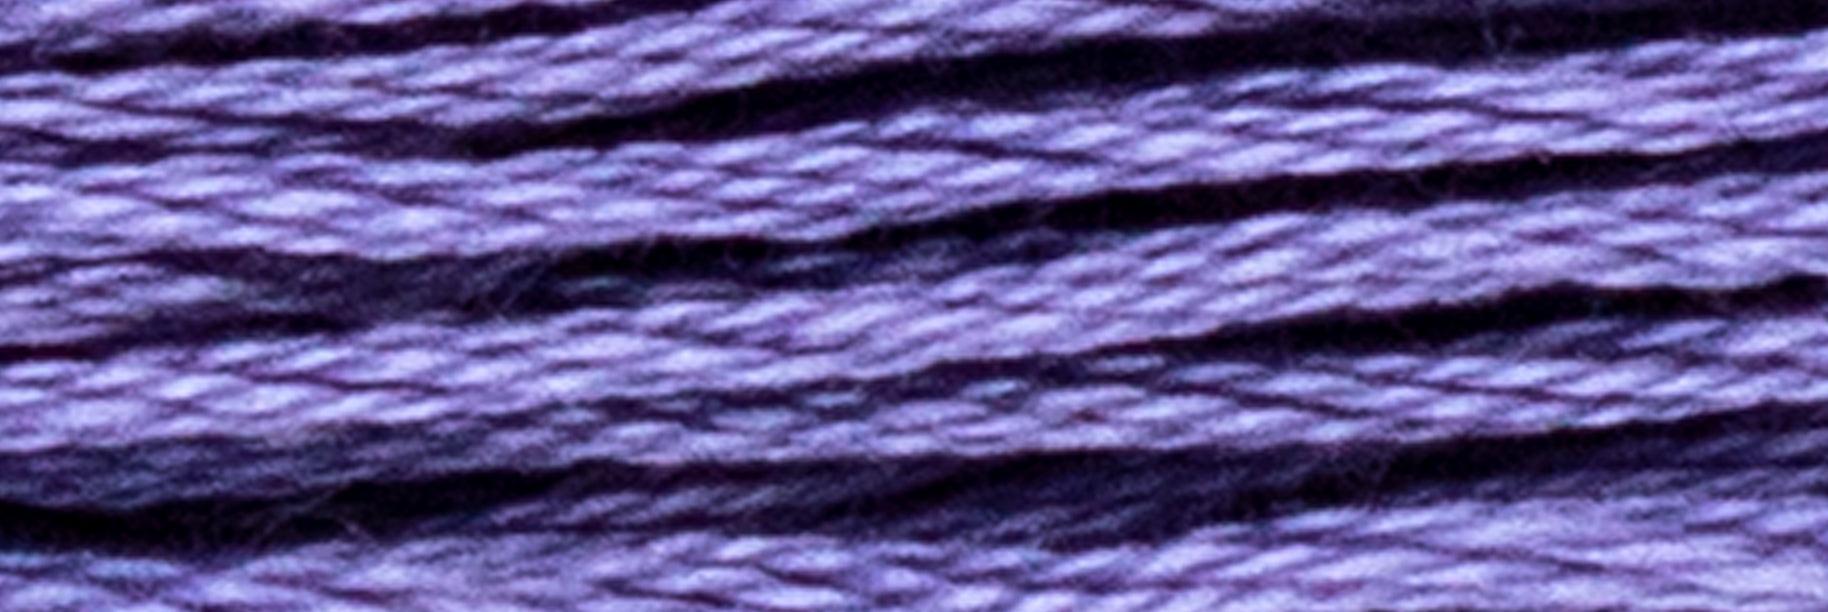 Stranded Cotton Luca-S - 134 / DMC 31 / Anchor X - Luca-S Stranded Cotton